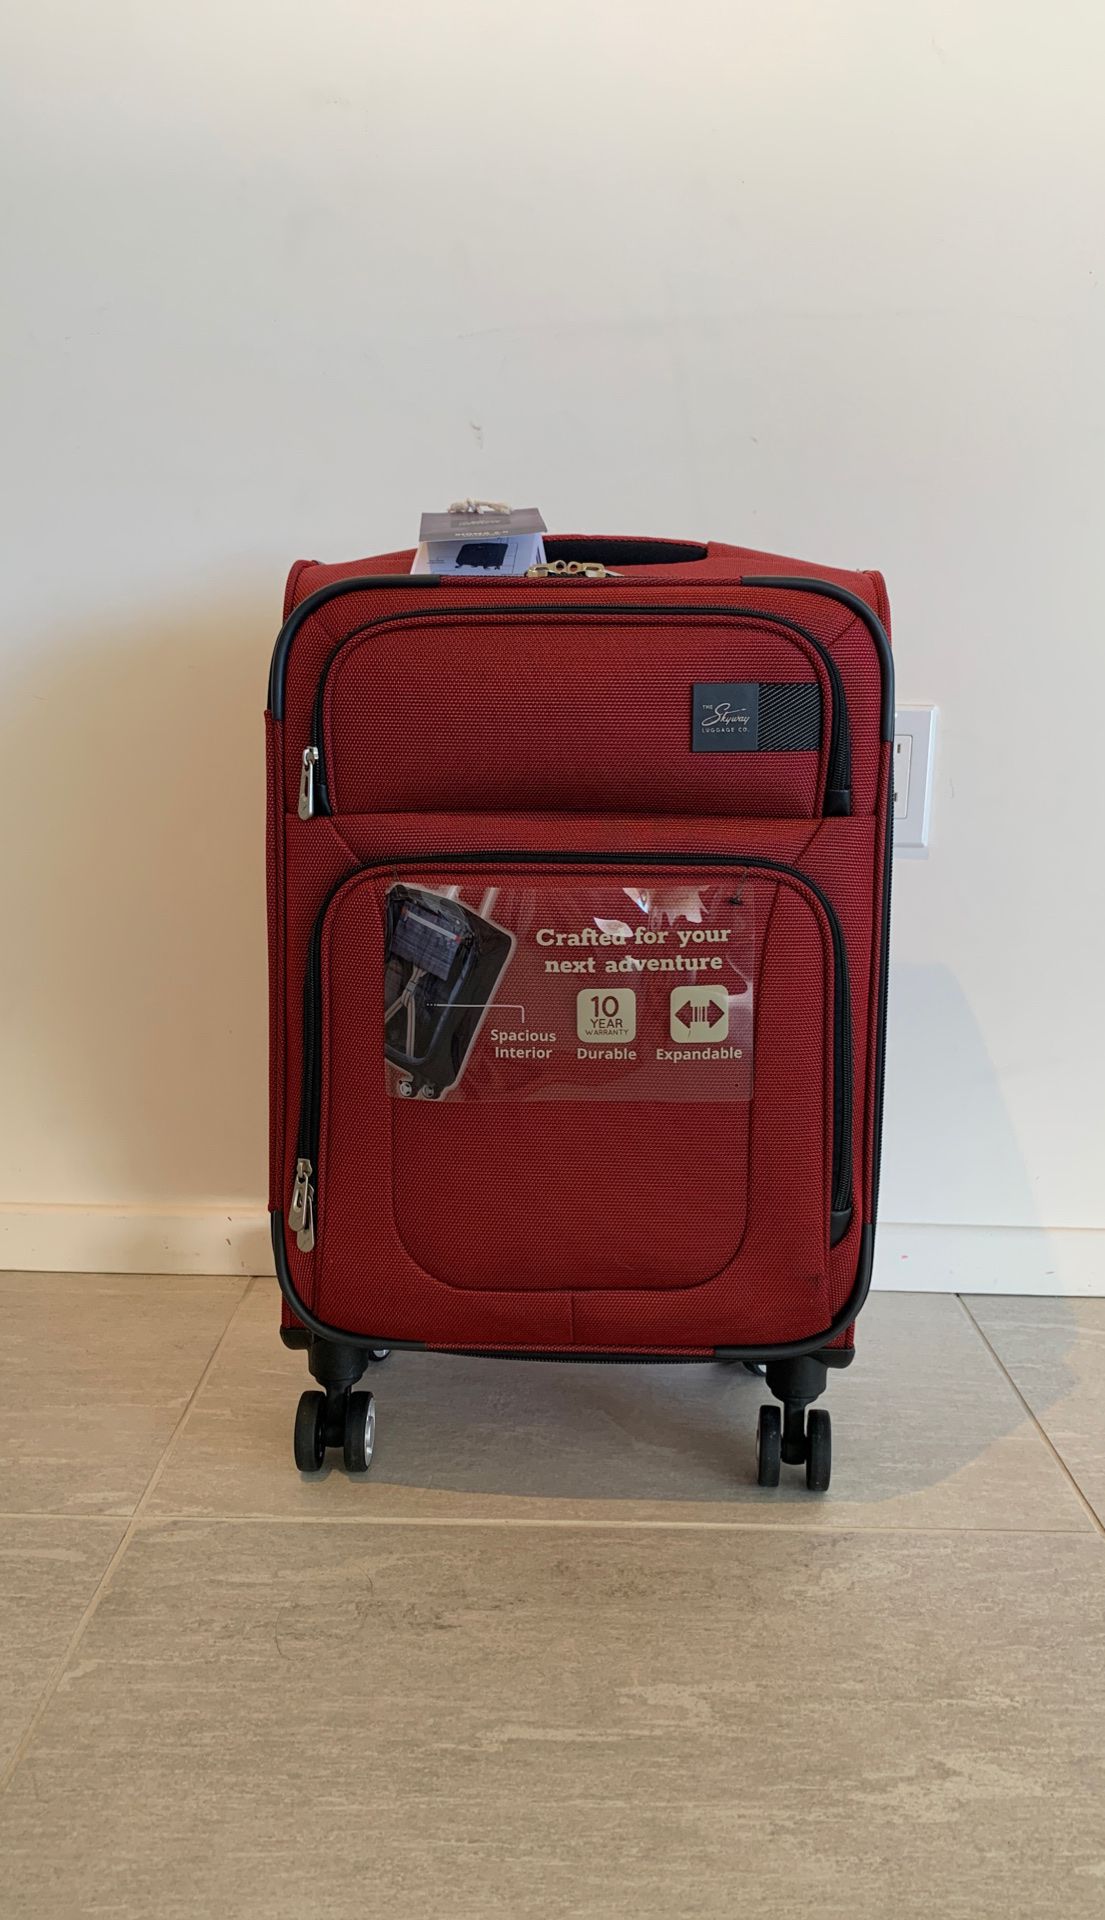 The Skyway Luggage Co. Luggage Bag